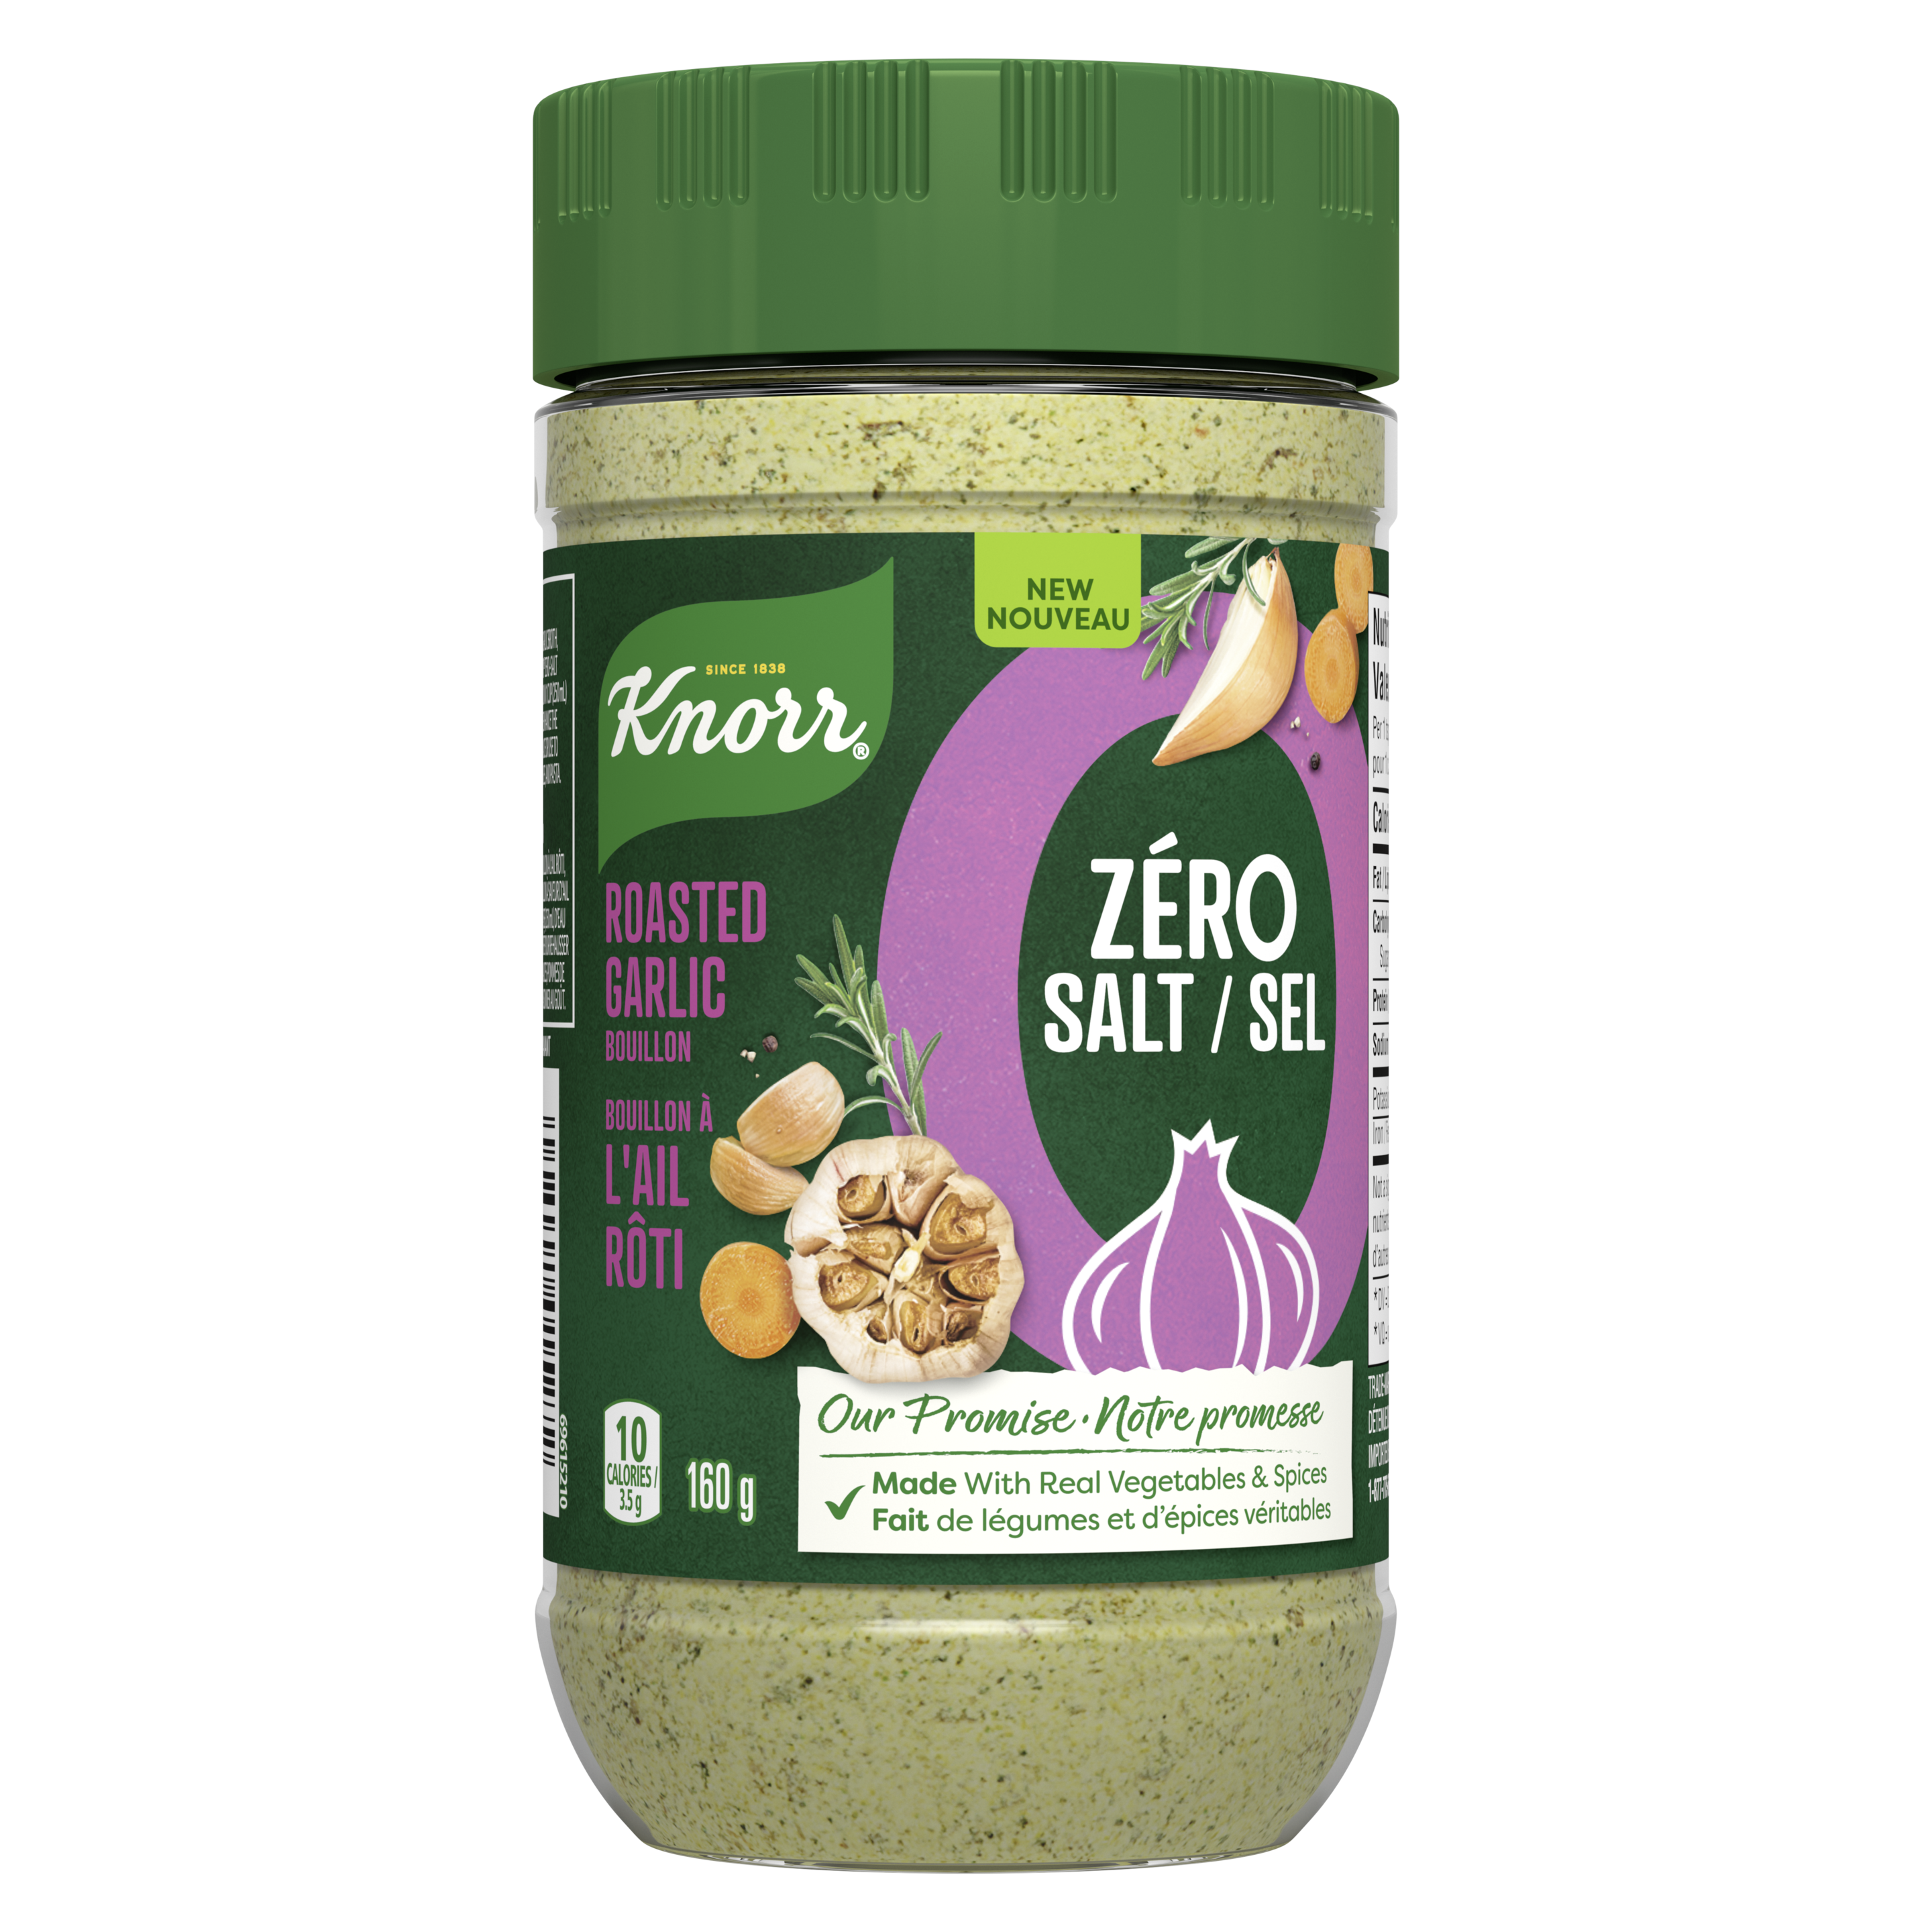 Knorr® Zero Salt Roasted Garlic Bouillon Front of Pack